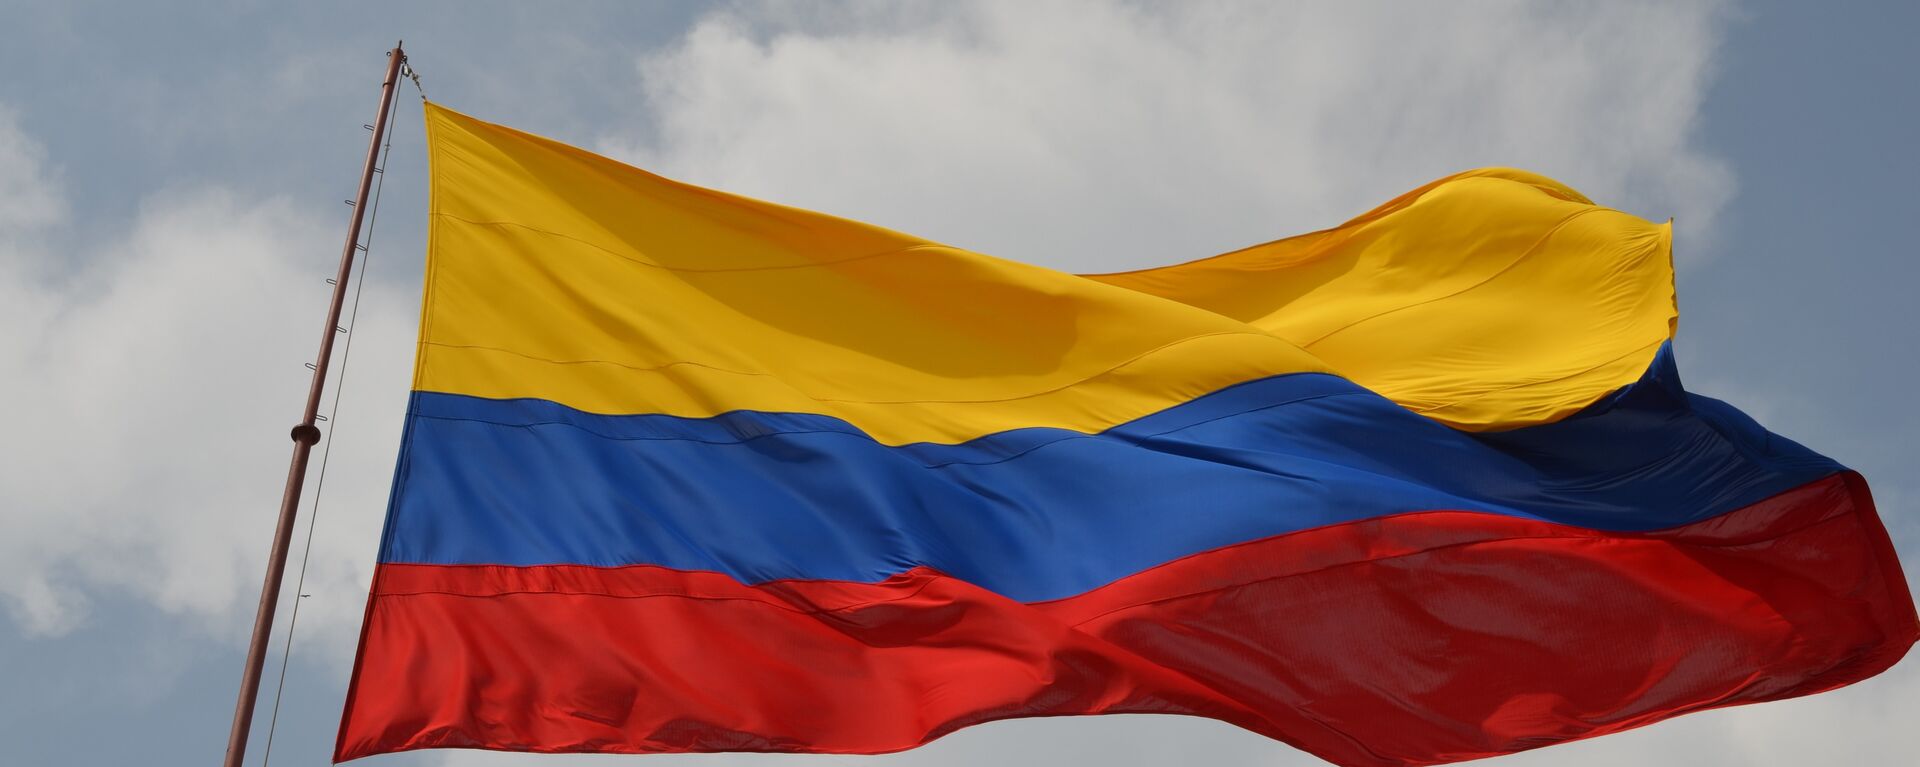 Bandera de Colombia - Sputnik Mundo, 1920, 16.11.2021